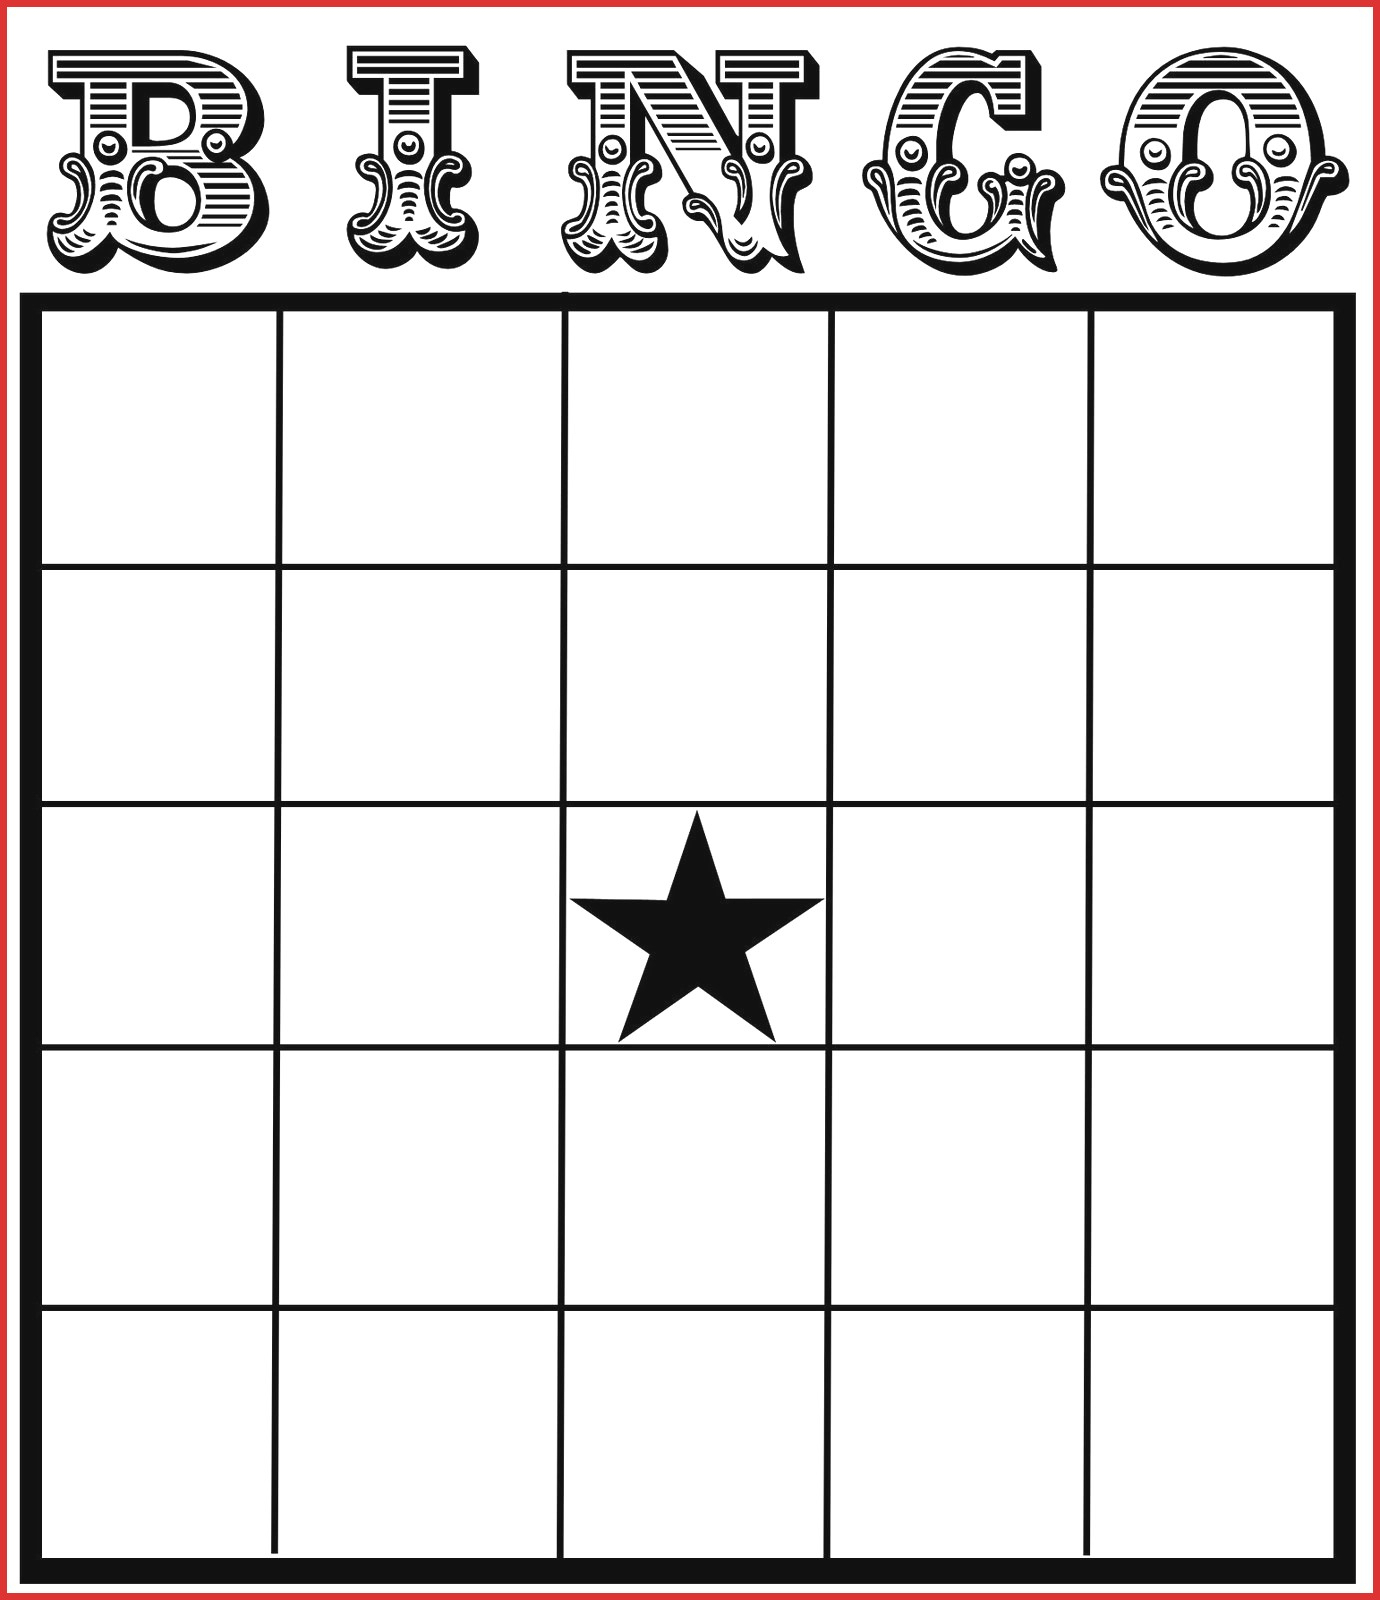 Bingo Card Template Word - Tomope.zaribanks.co